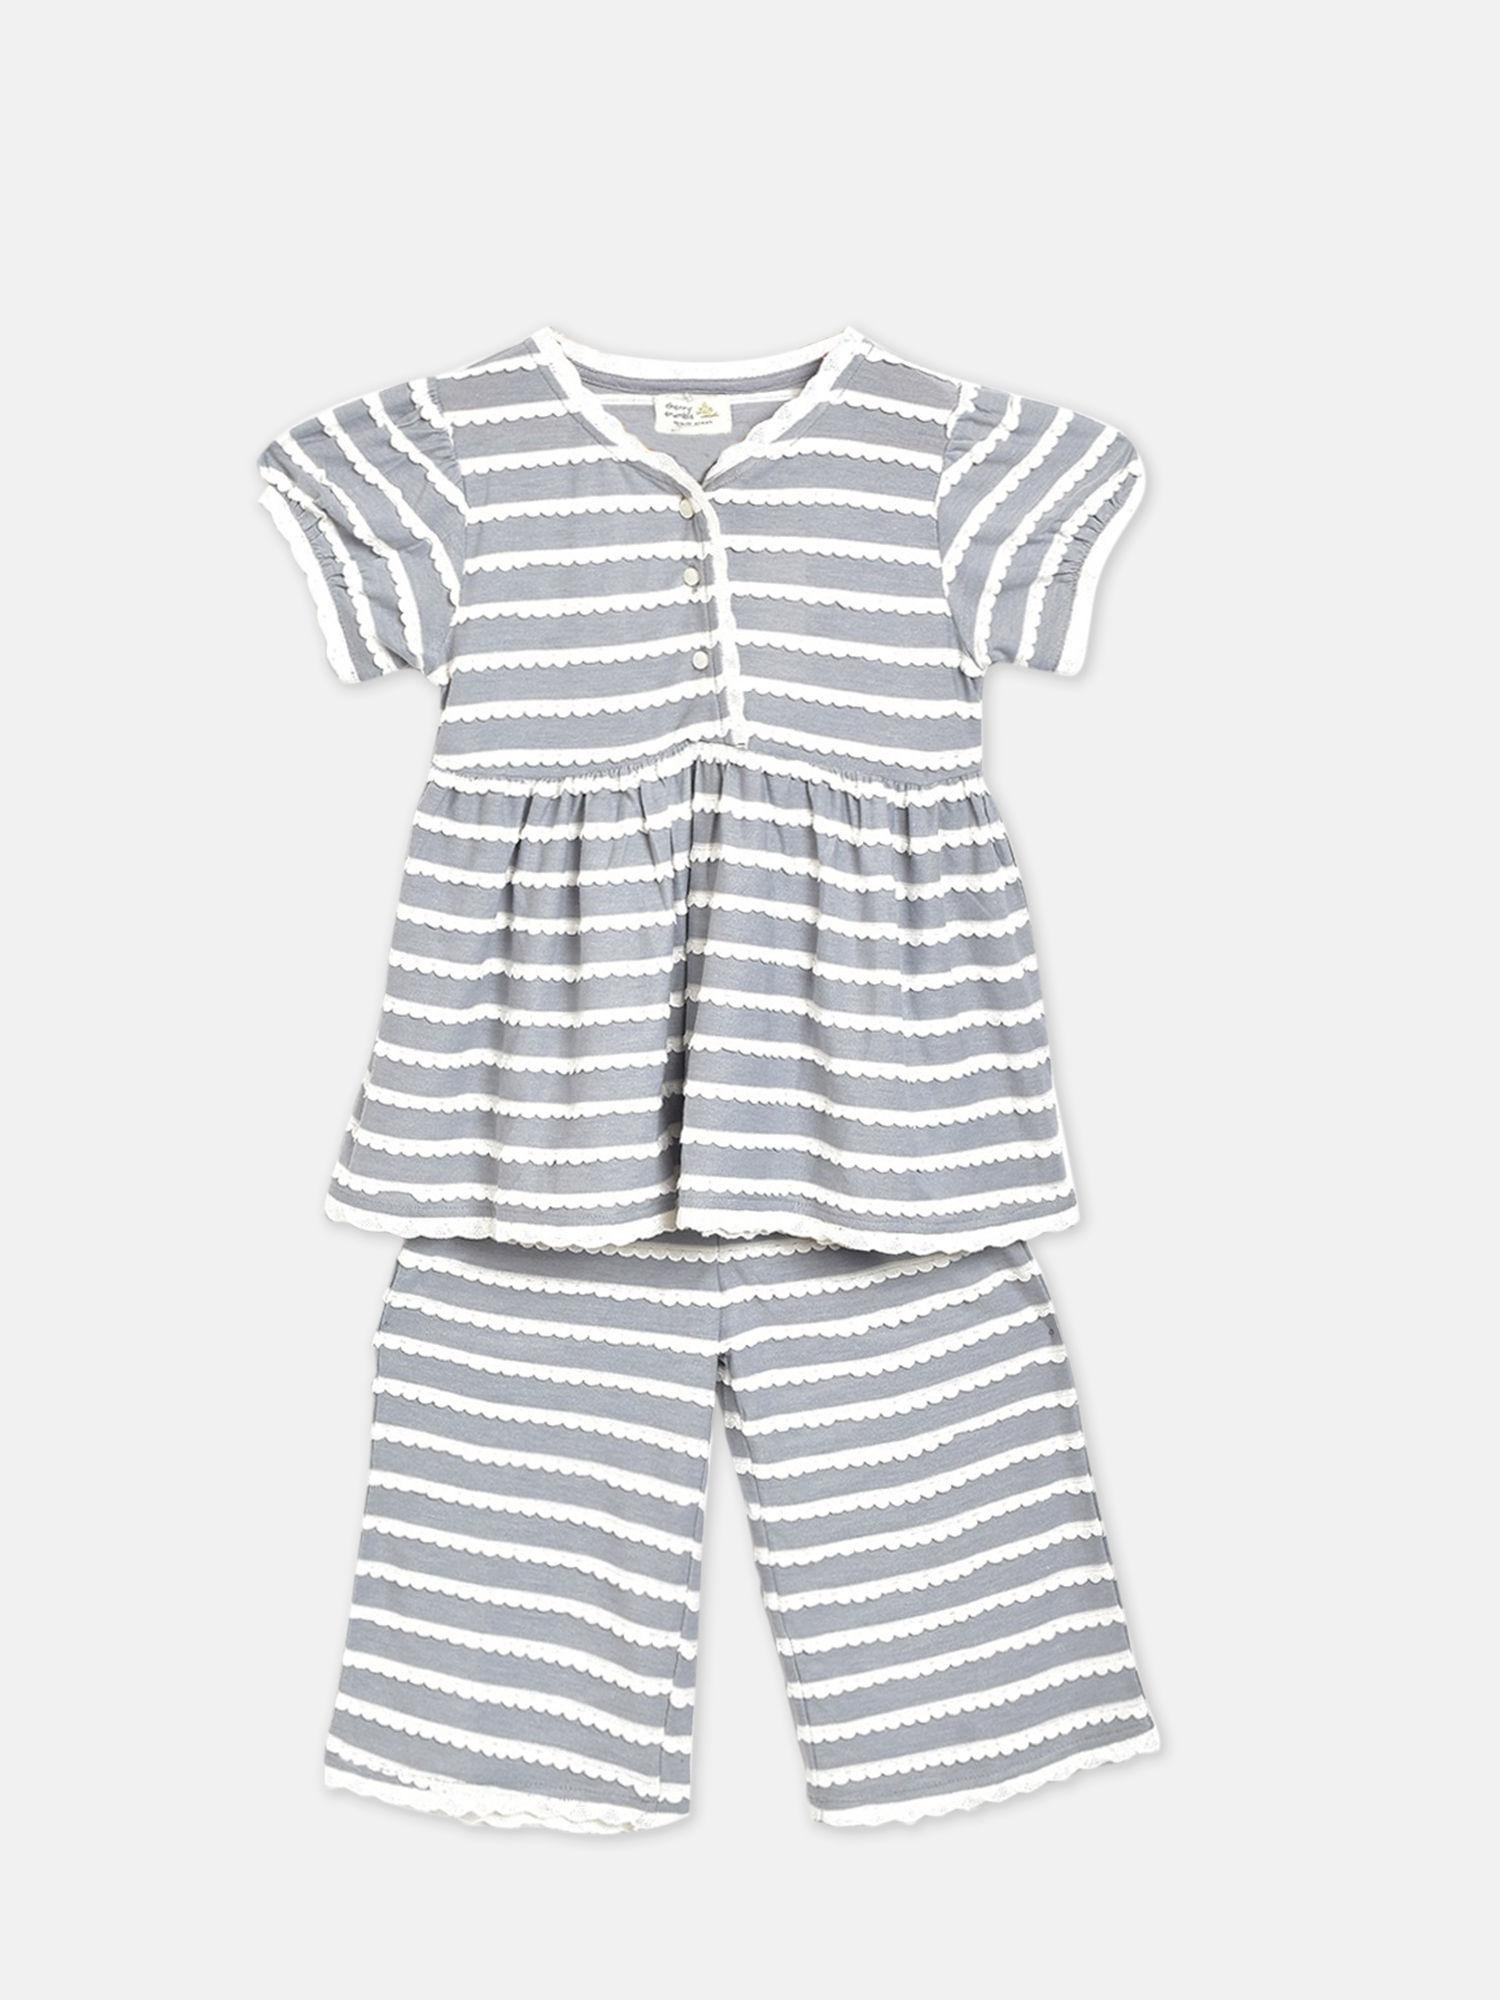 grey striped top & pyjama nightsuit